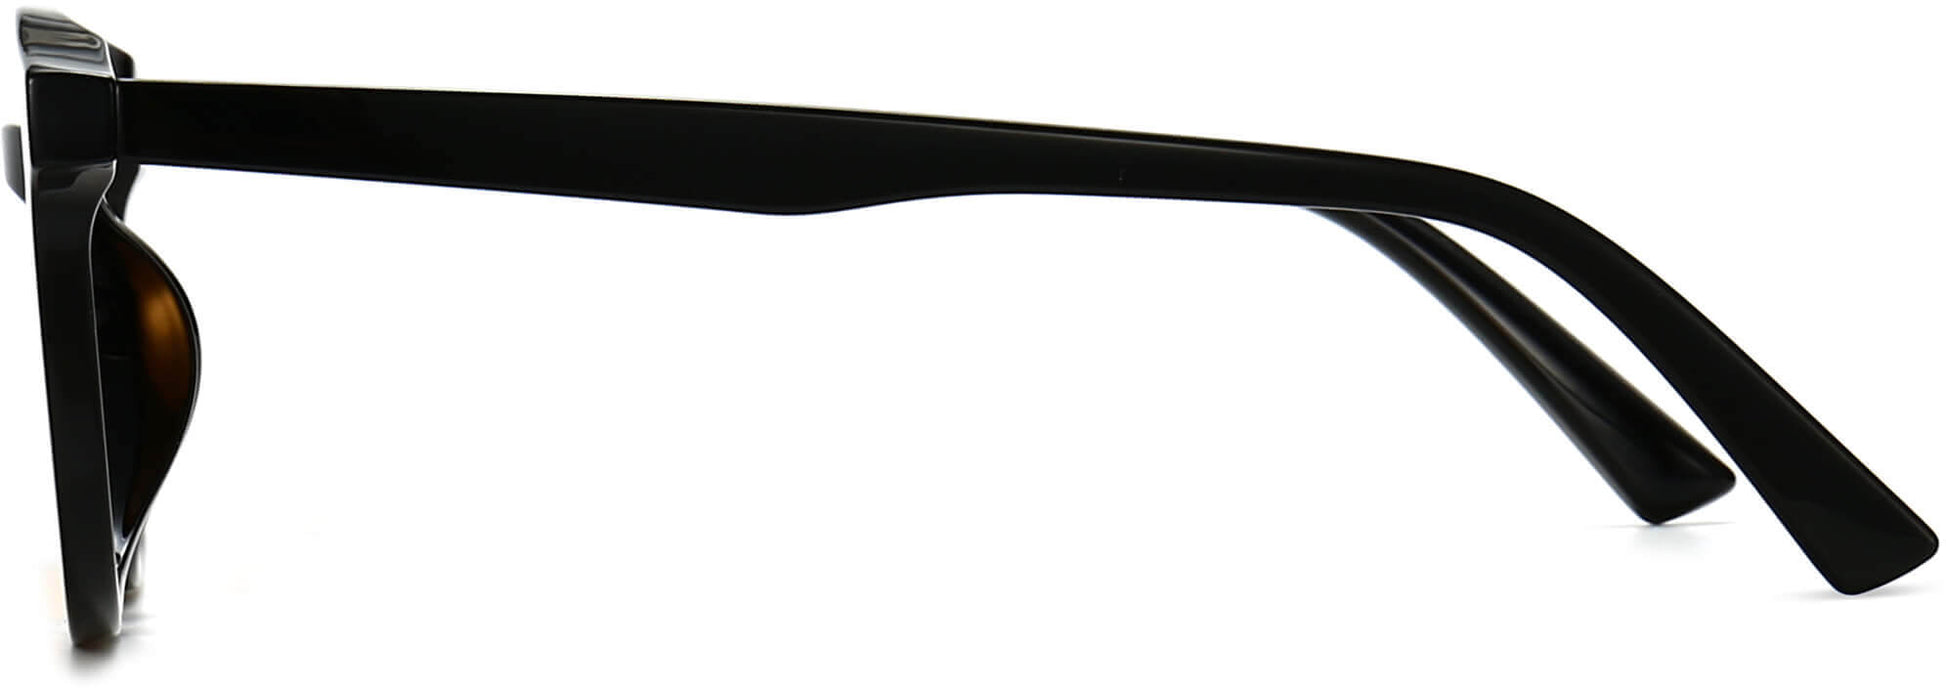 Beckett Black Plastic Sunglasses from ANRRI, side view